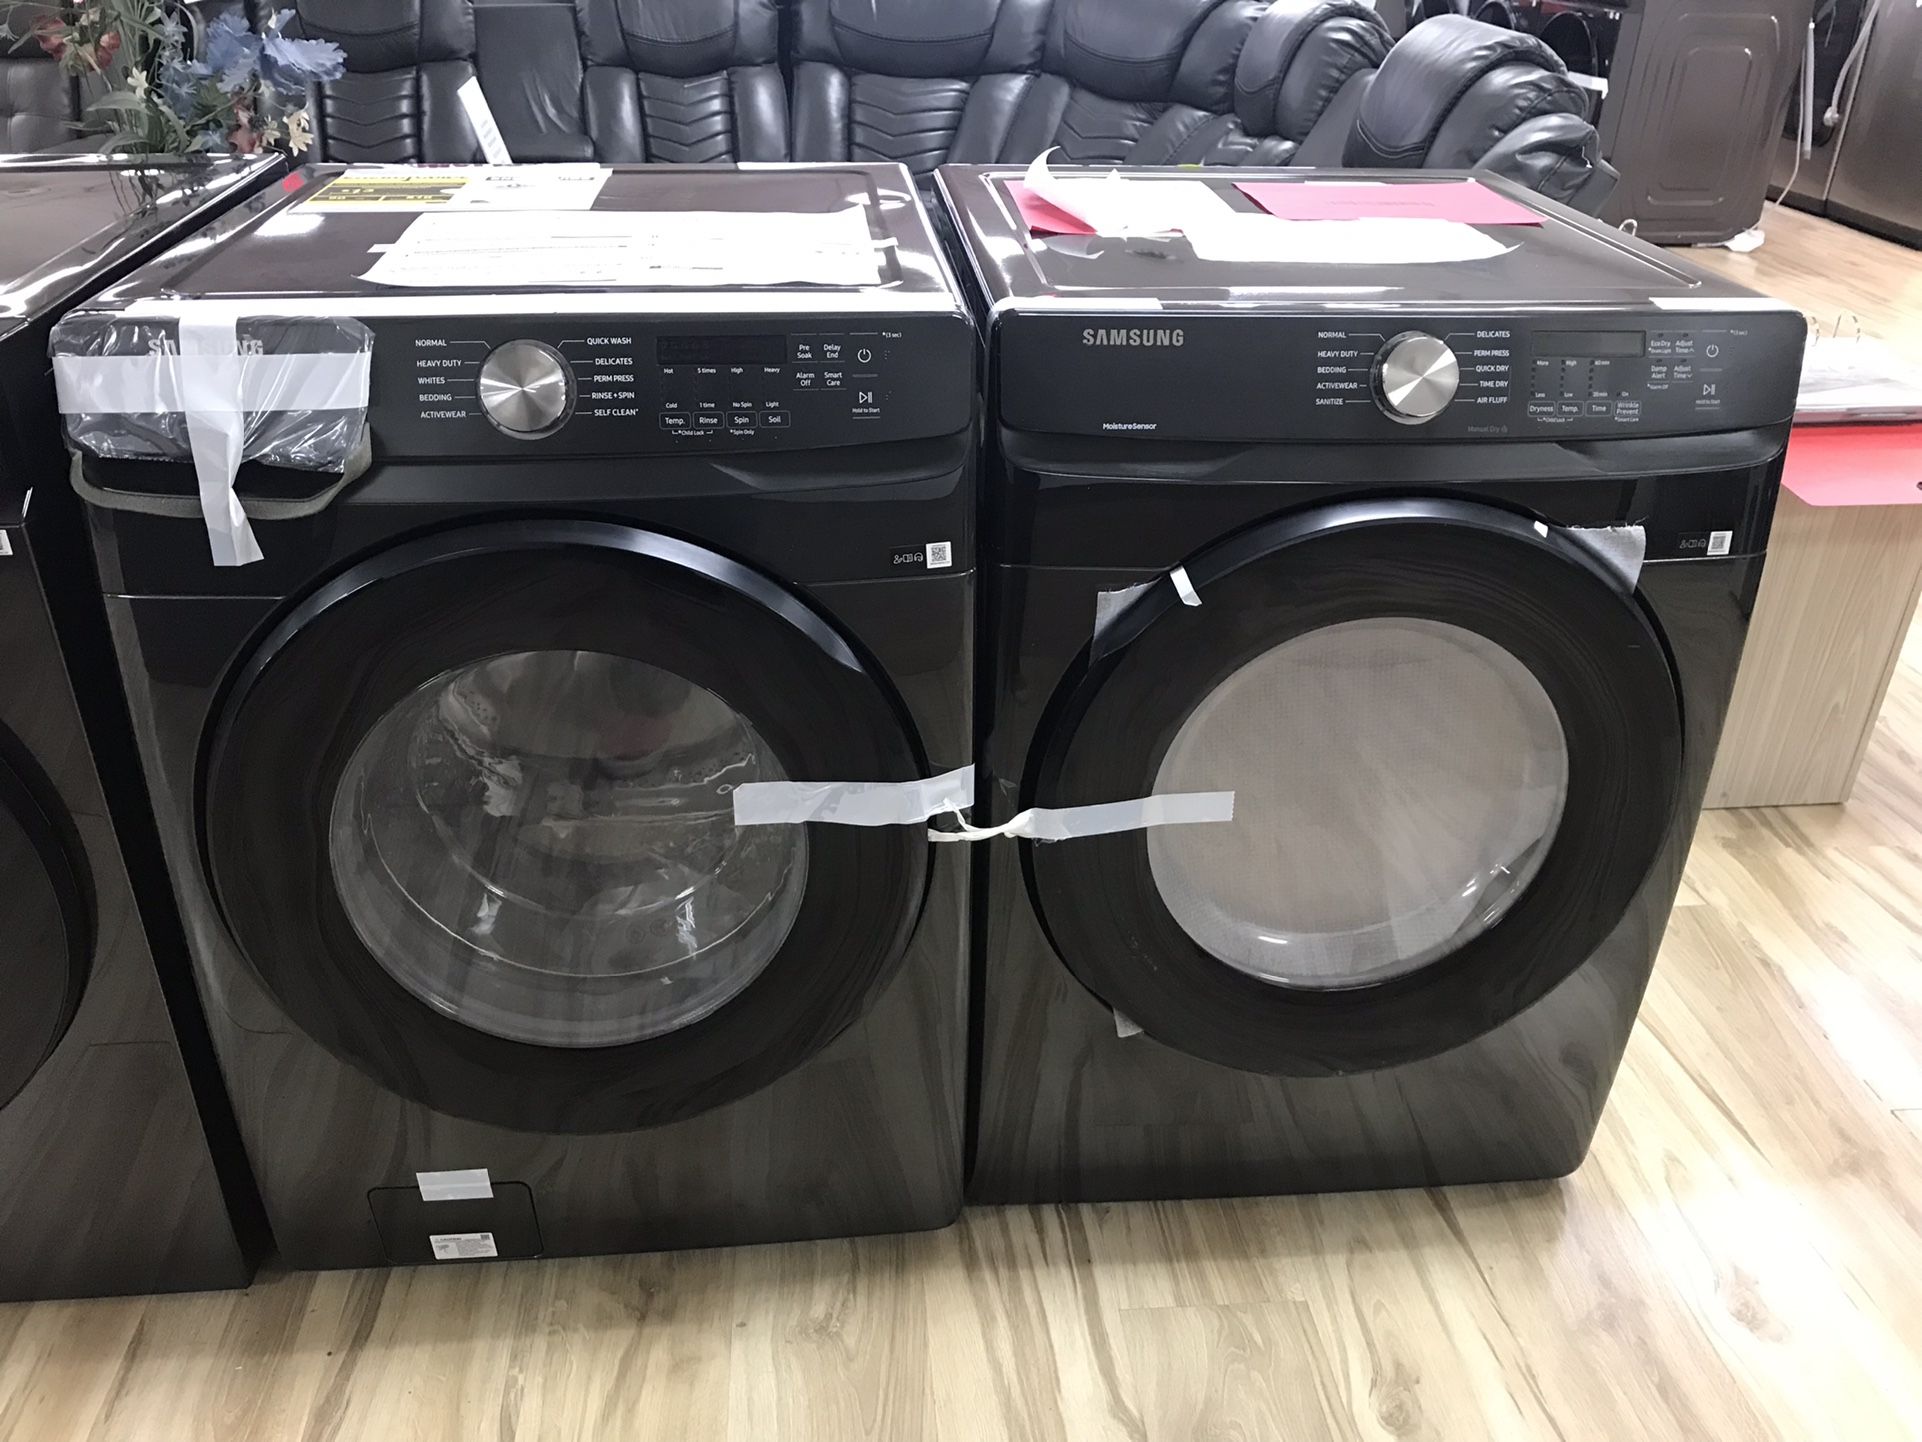 Samsung washer and dryer set in Black